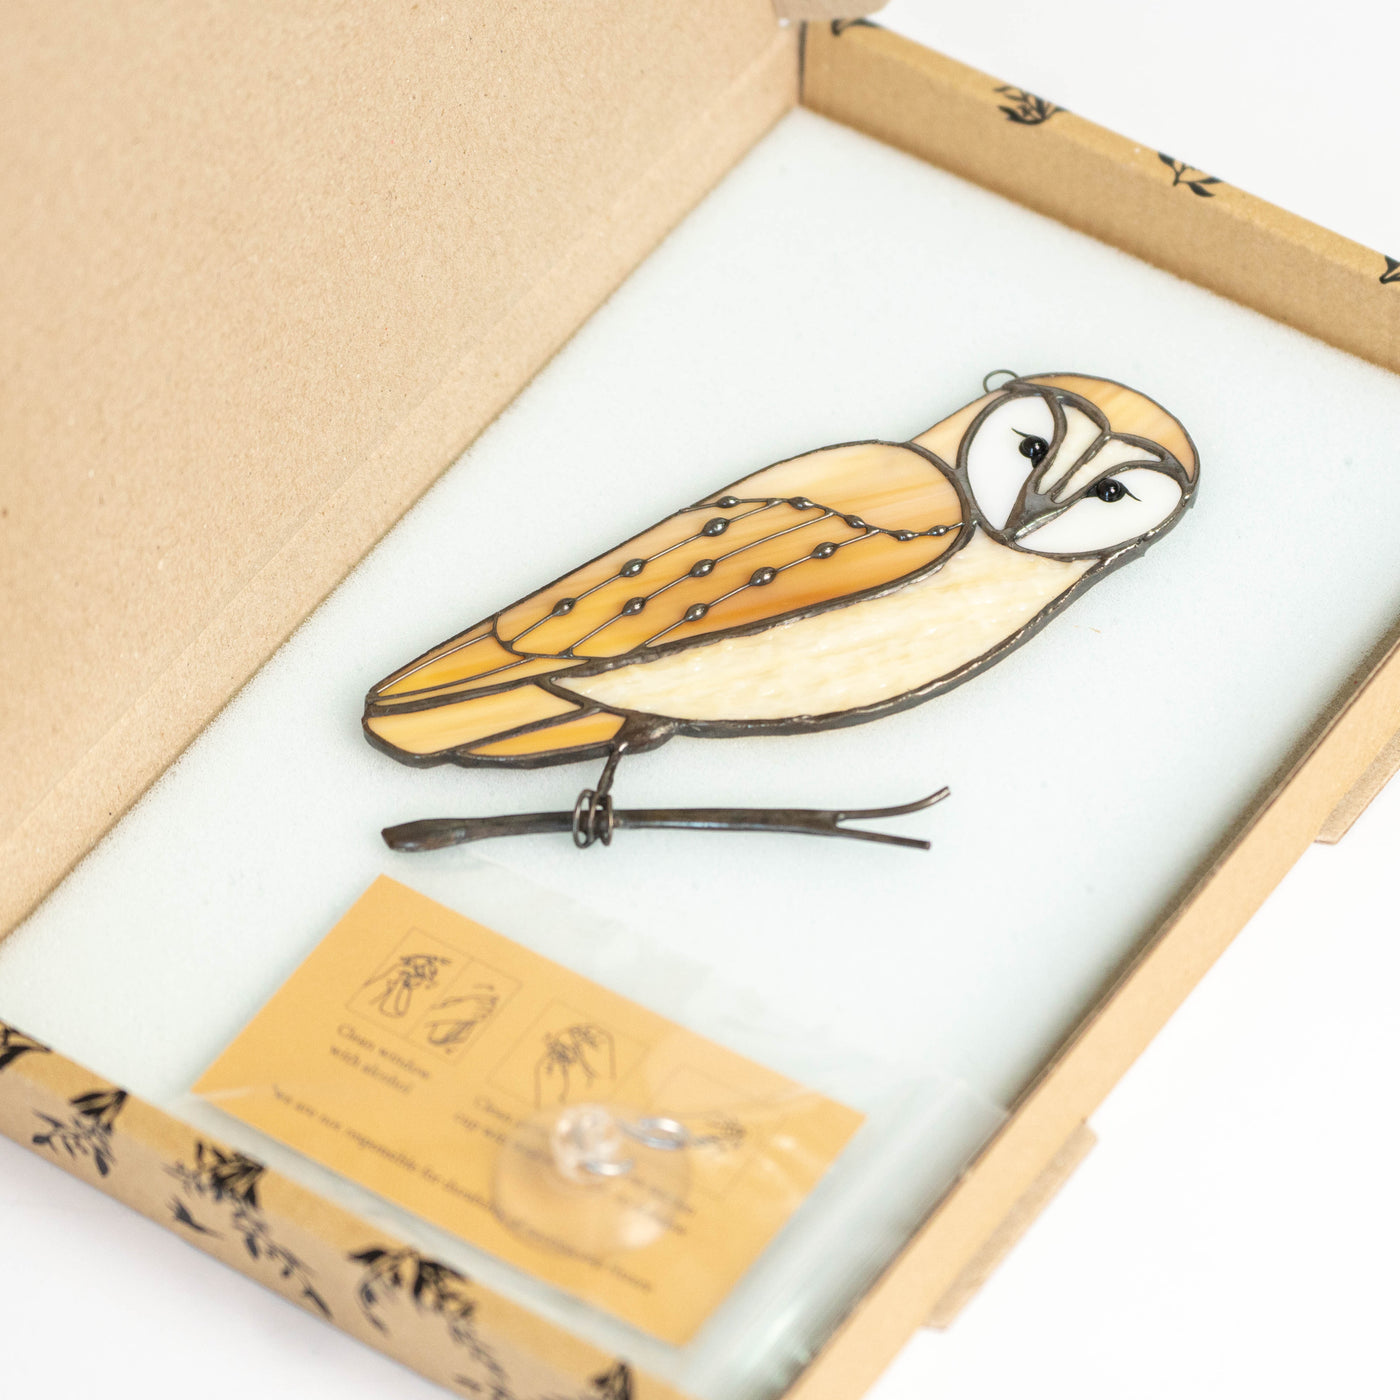 Barred owls suncatcher in a brand box